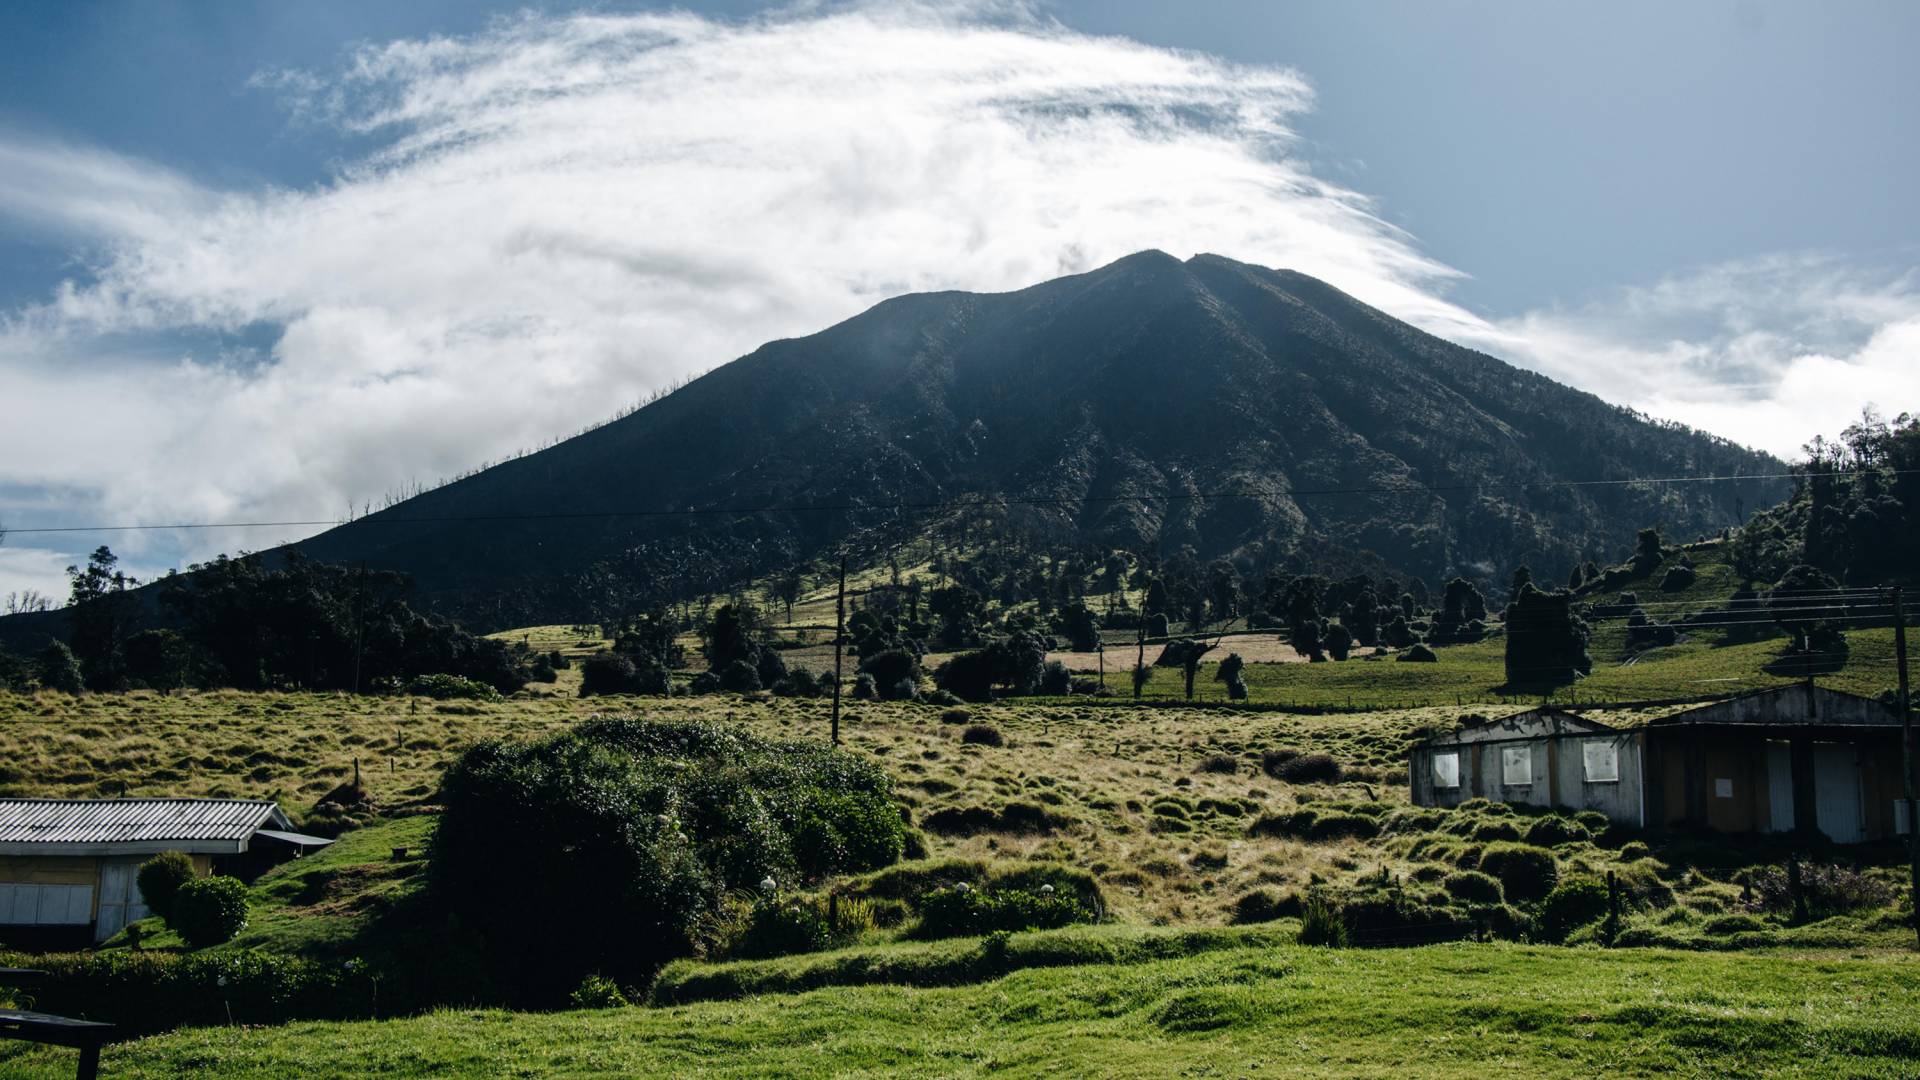 A mountain landscape photo taken in San Isidro, Costa Rica.   